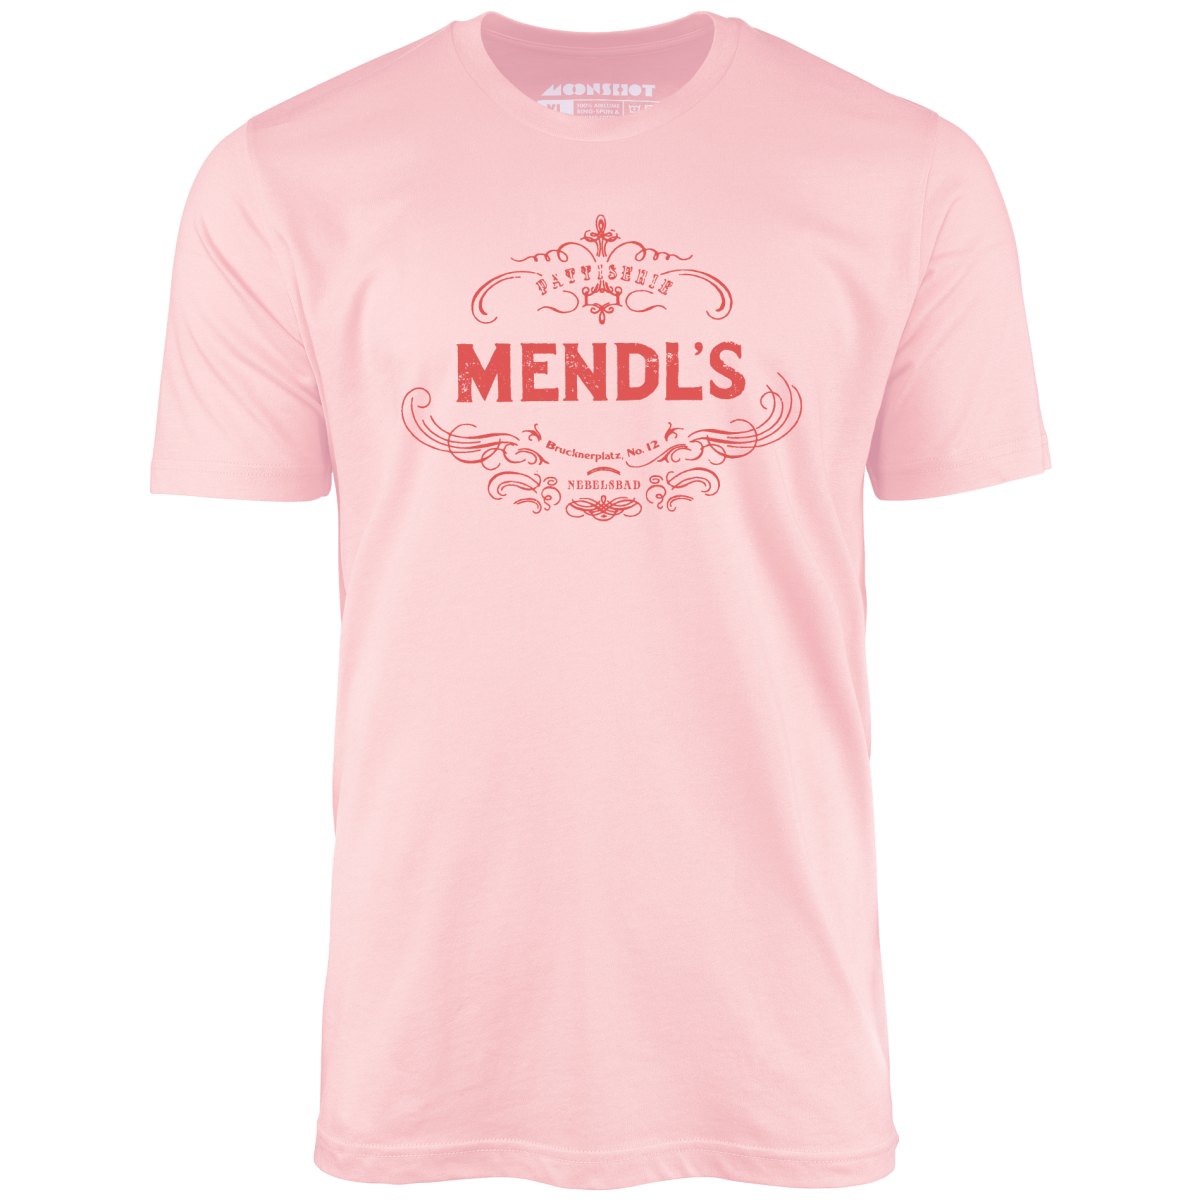 Mendl's Pattiserie - The Grand Budapest Hotel - Unisex T-Shirt